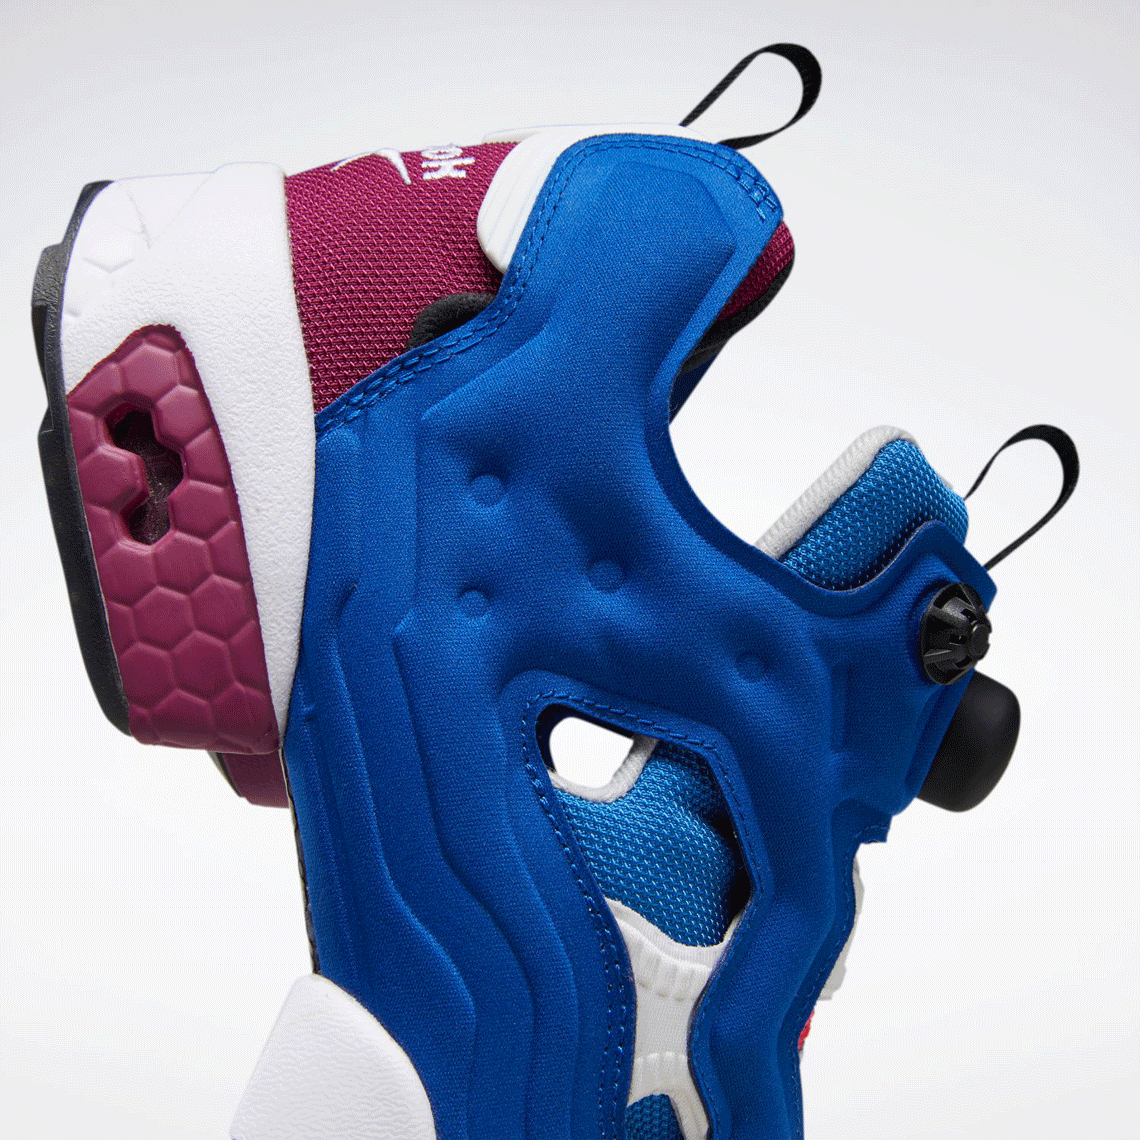 KICKS LAB. Reebok Instapump Fury FY3045 Release | SneakerNews.com